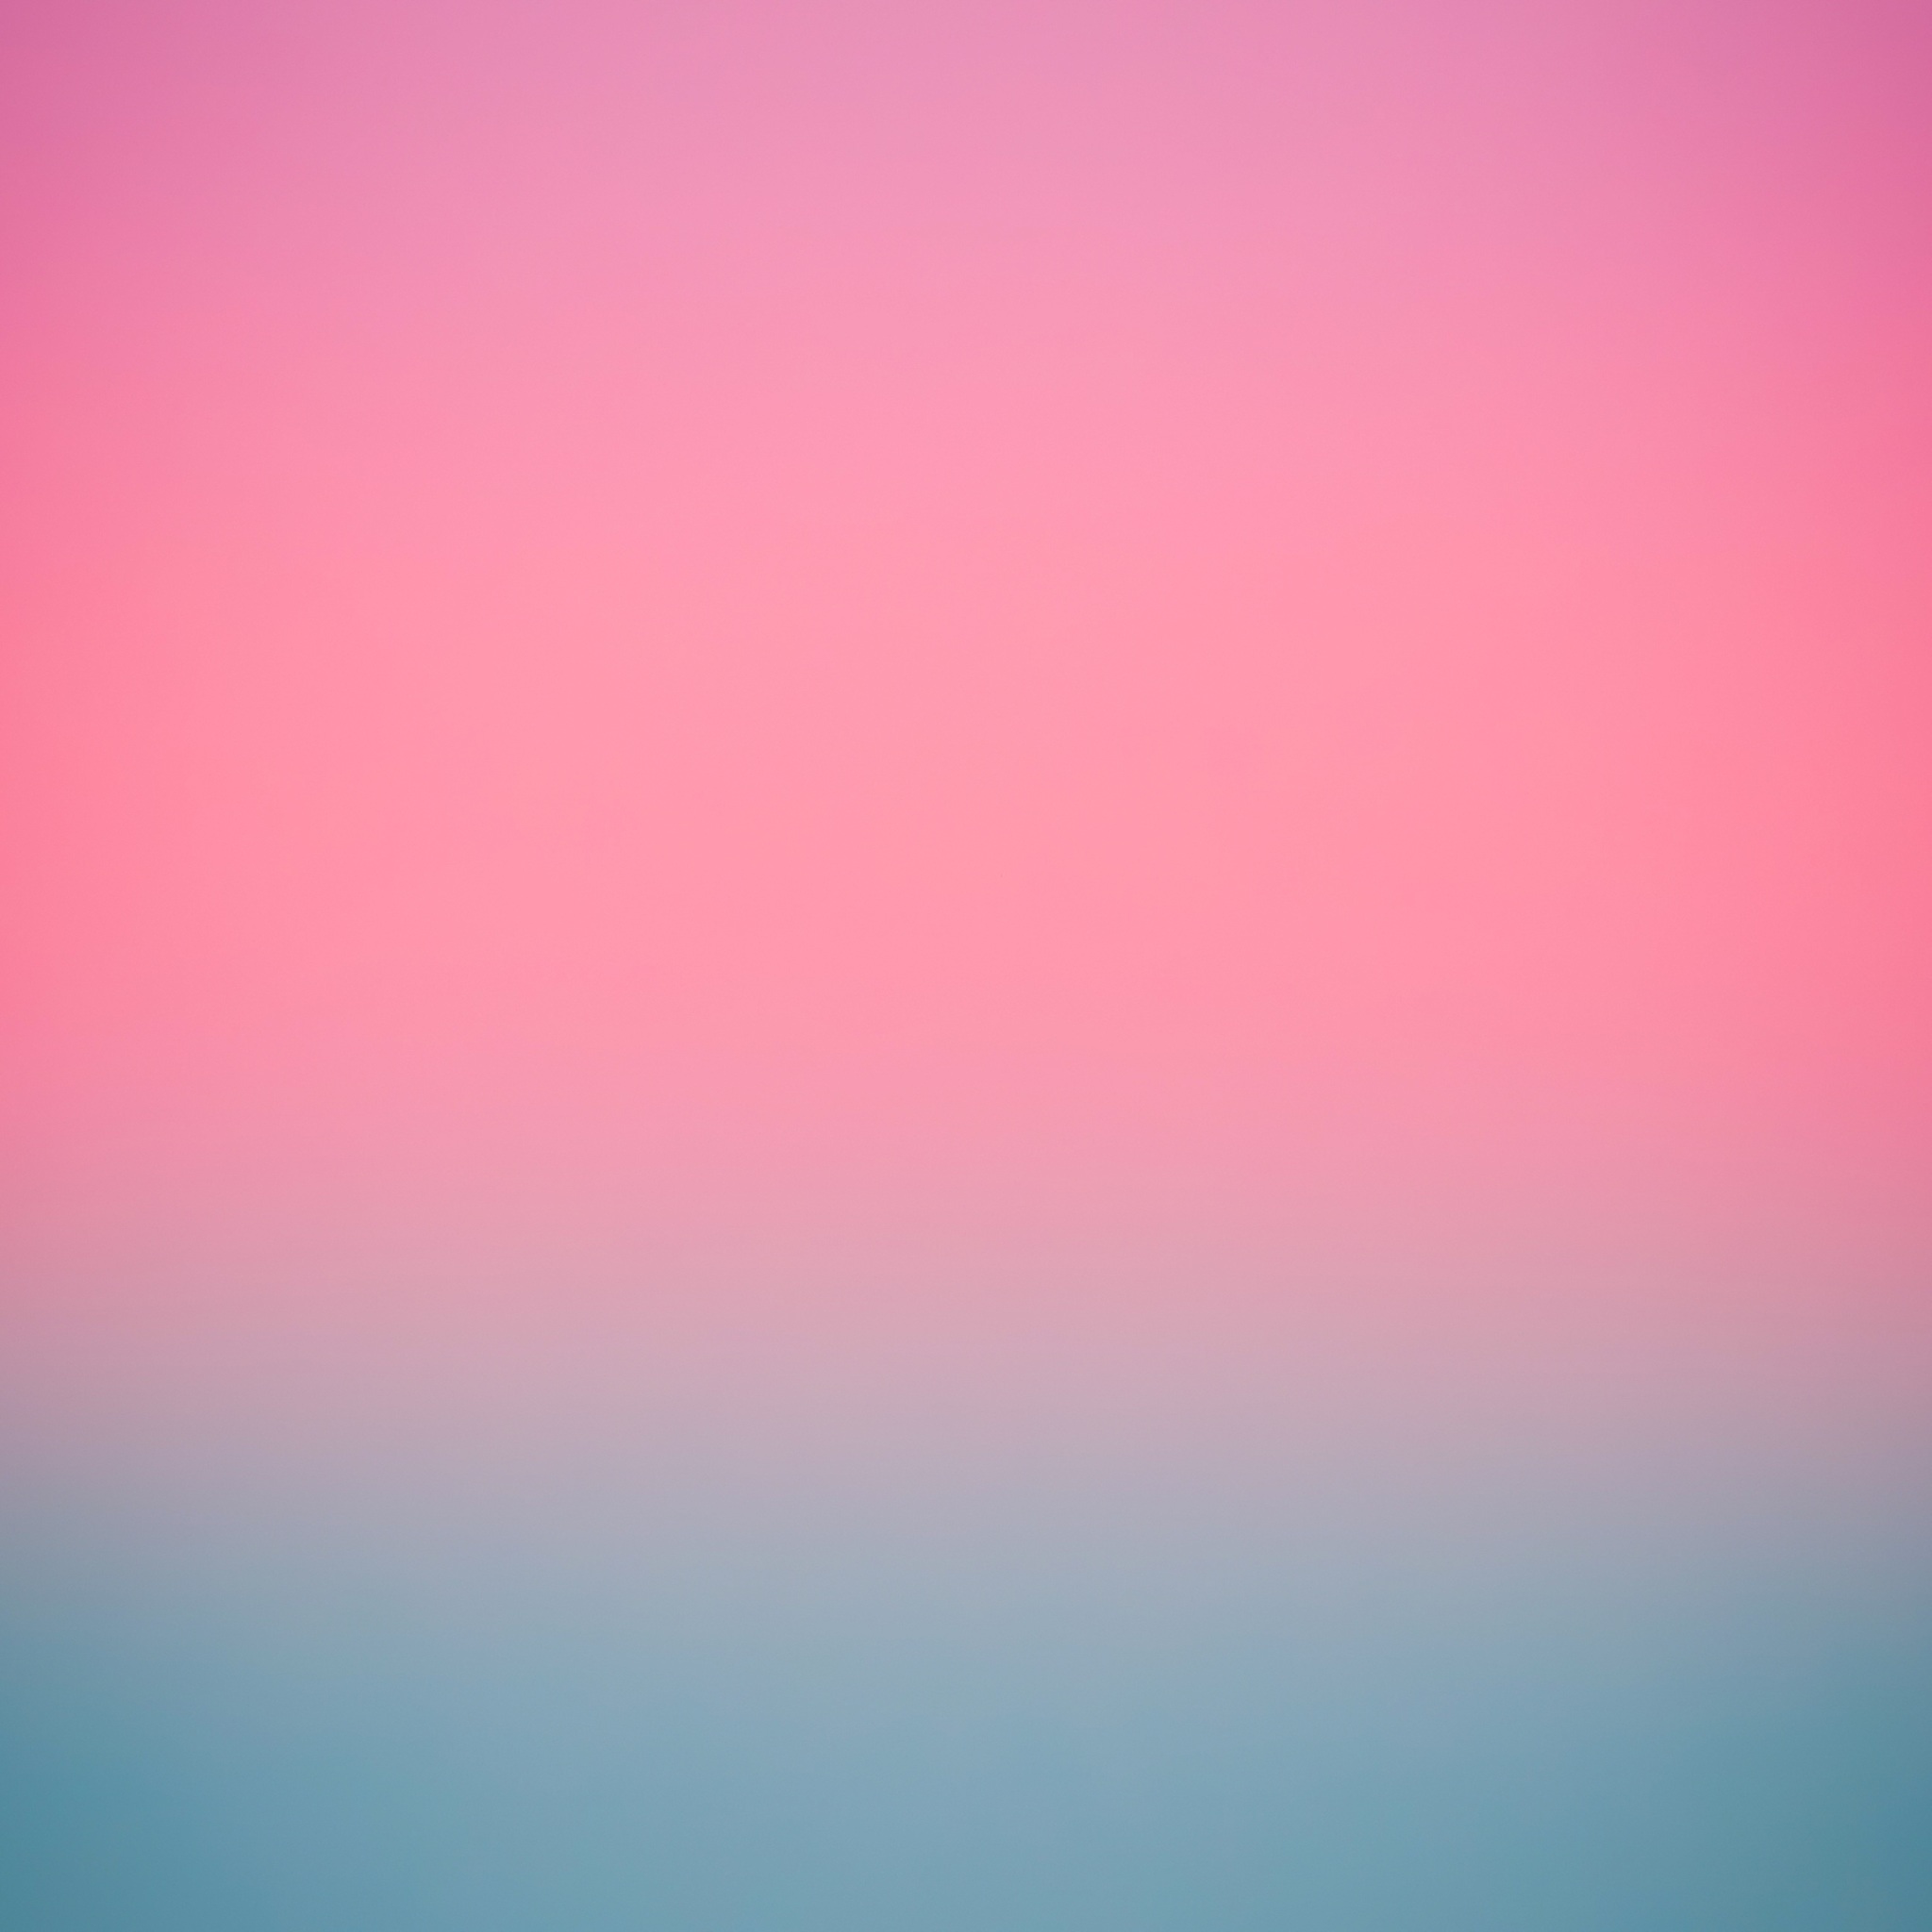 Wallpaper 4k Pink Blur Background Wallpaper